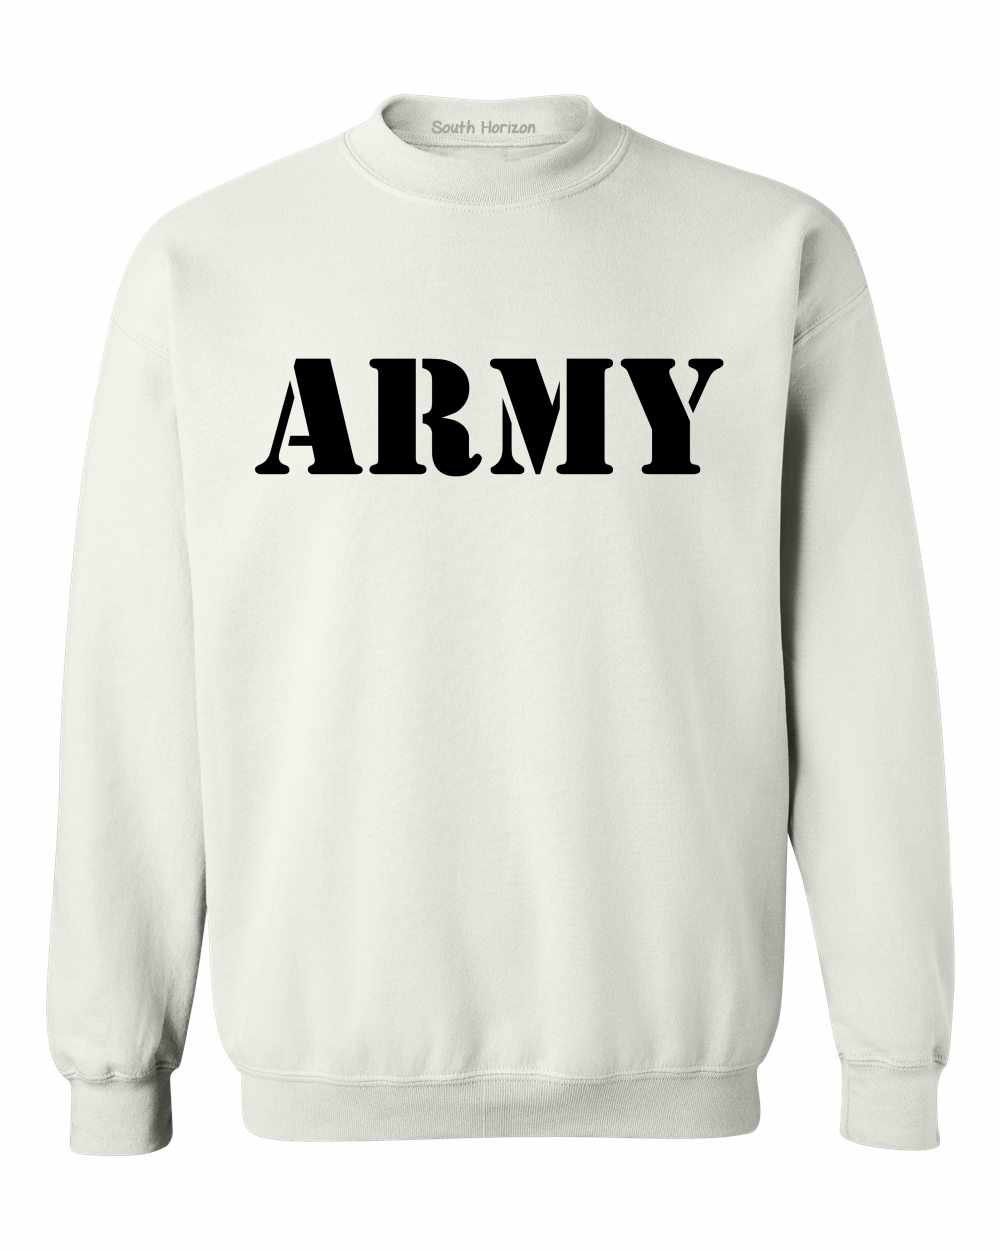 ARMY on SweatShirt (#338-11)